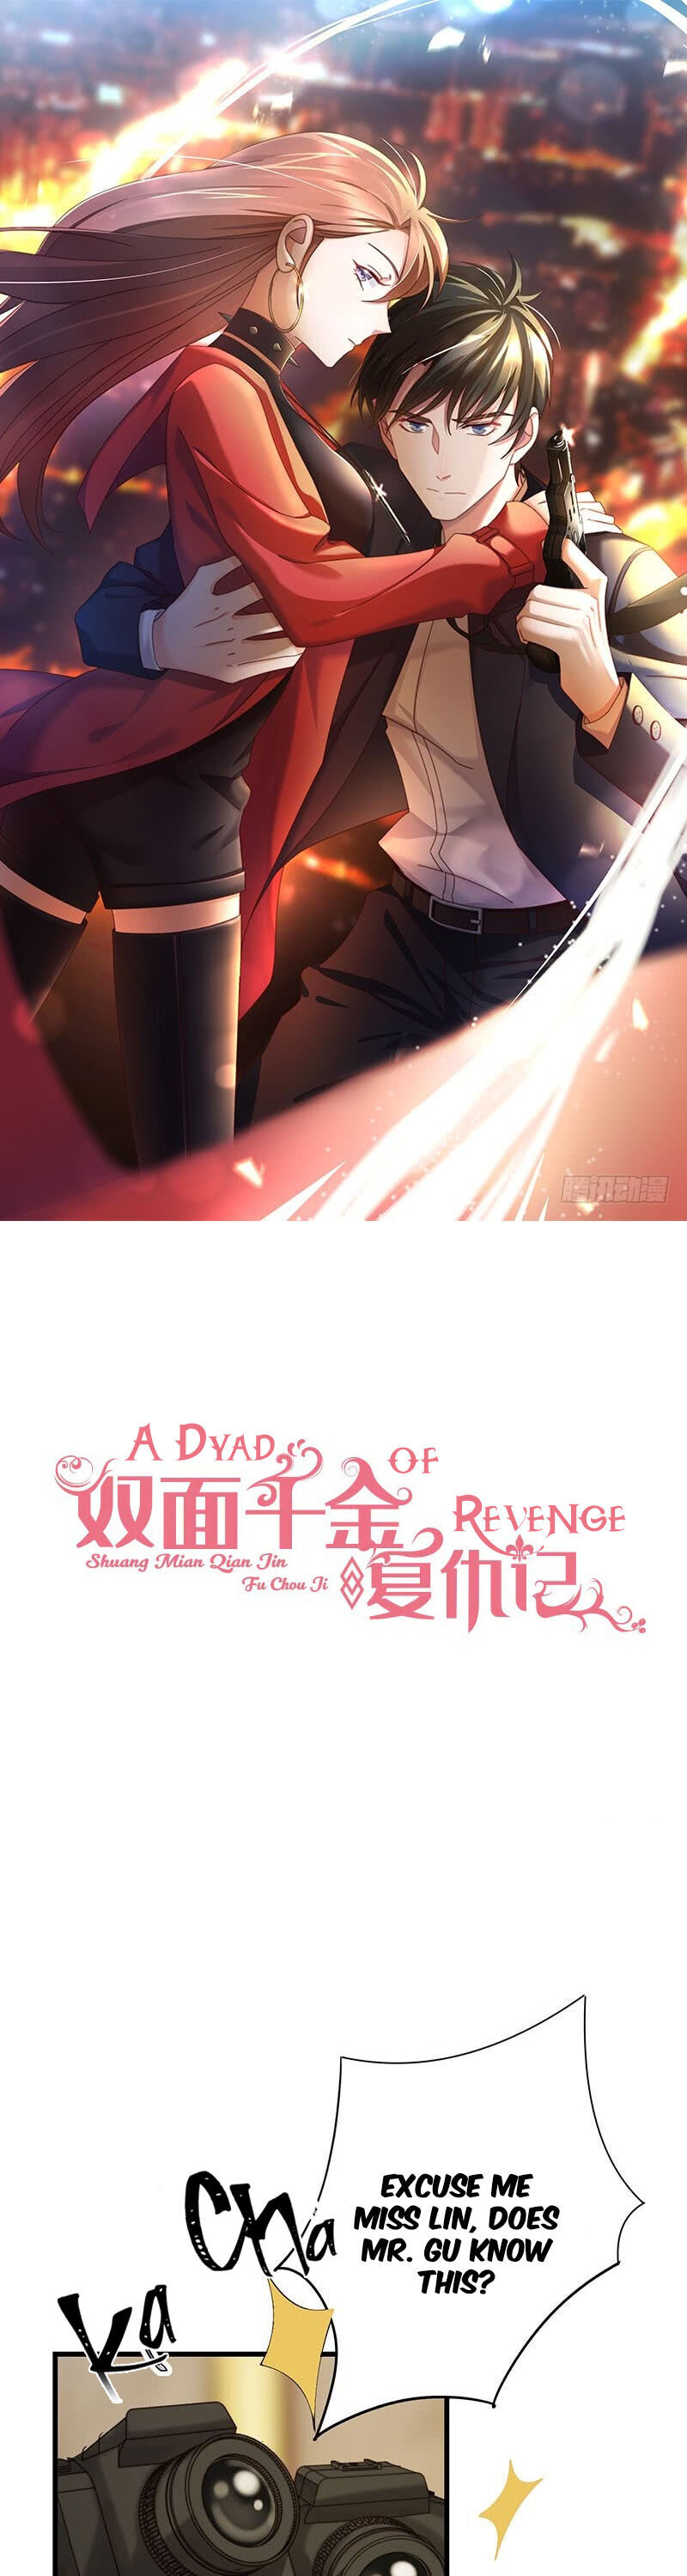 A Dyad Of Revenge - Page 2